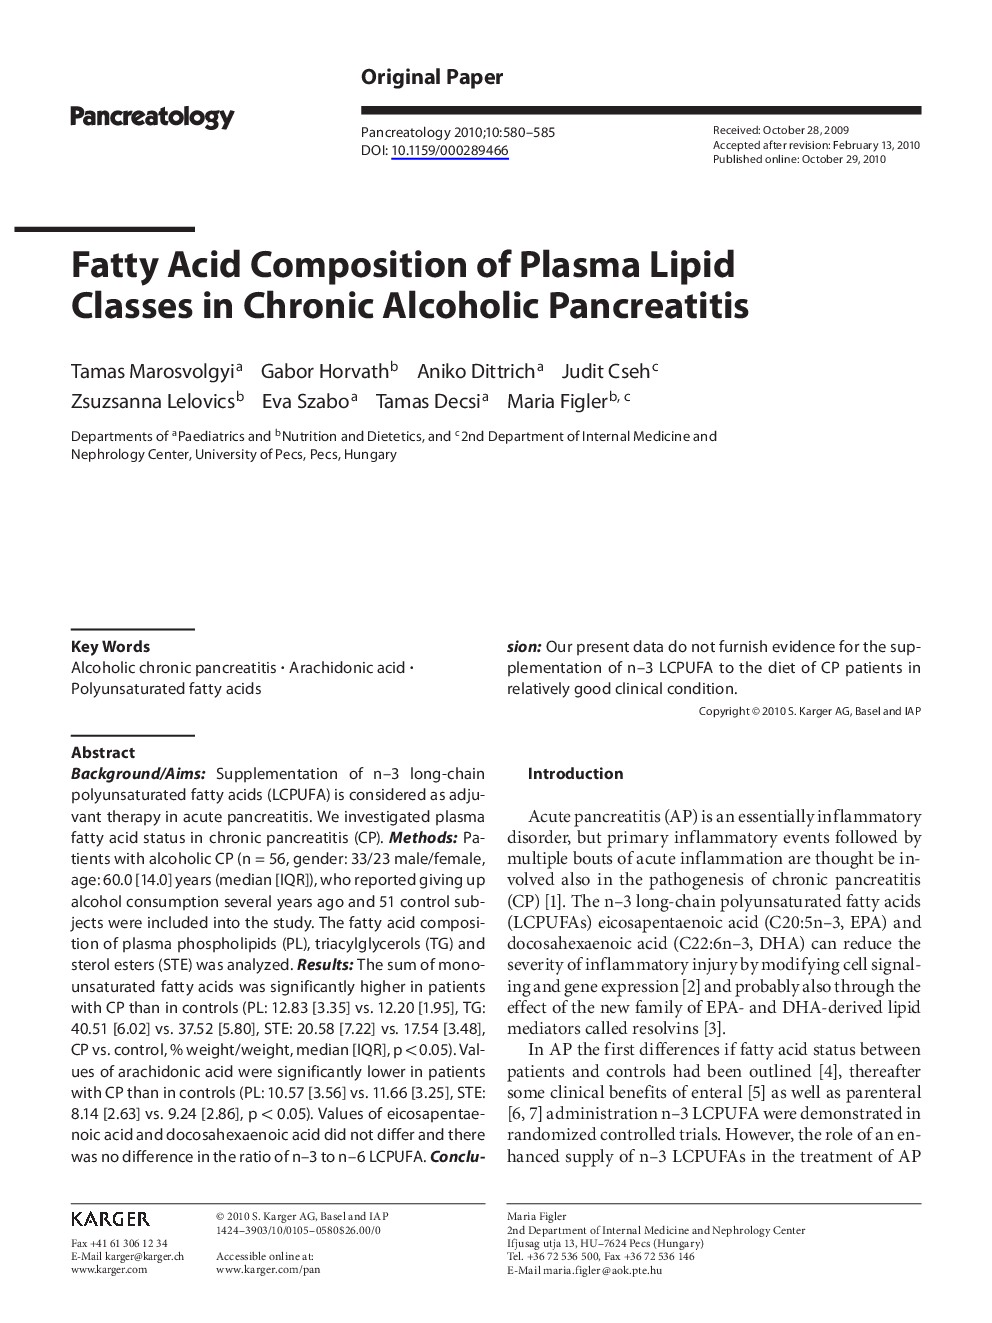 Fatty Acid Composition of Plasma Lipid Classes in Chronic Alcoholic Pancreatitis